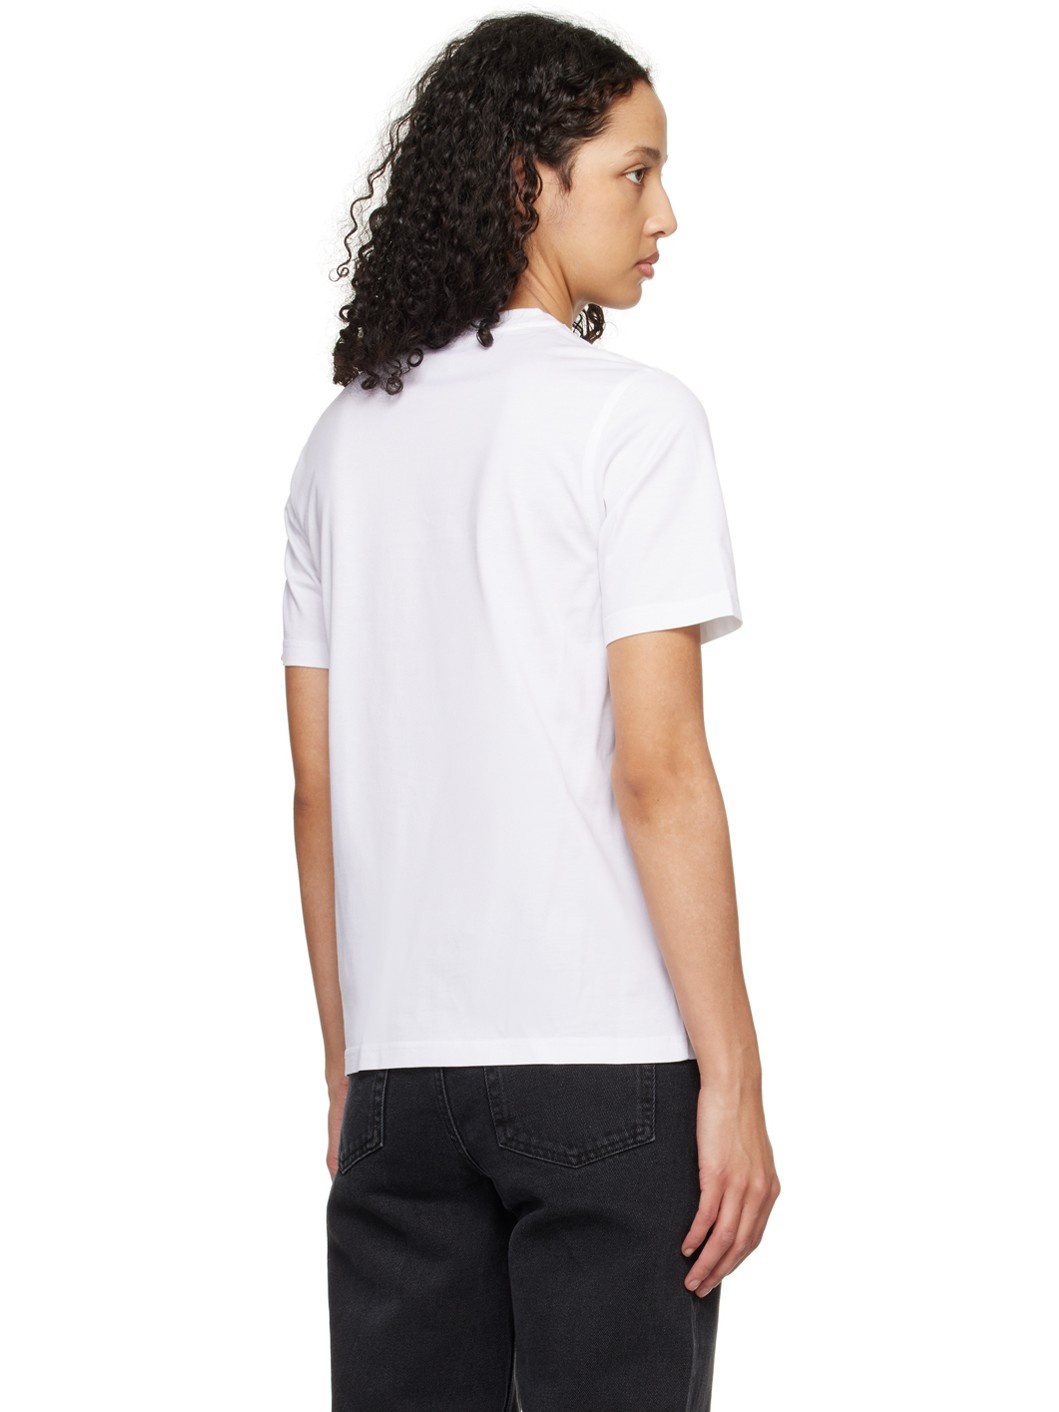 White Oak Leaf Crest T-Shirt - 3